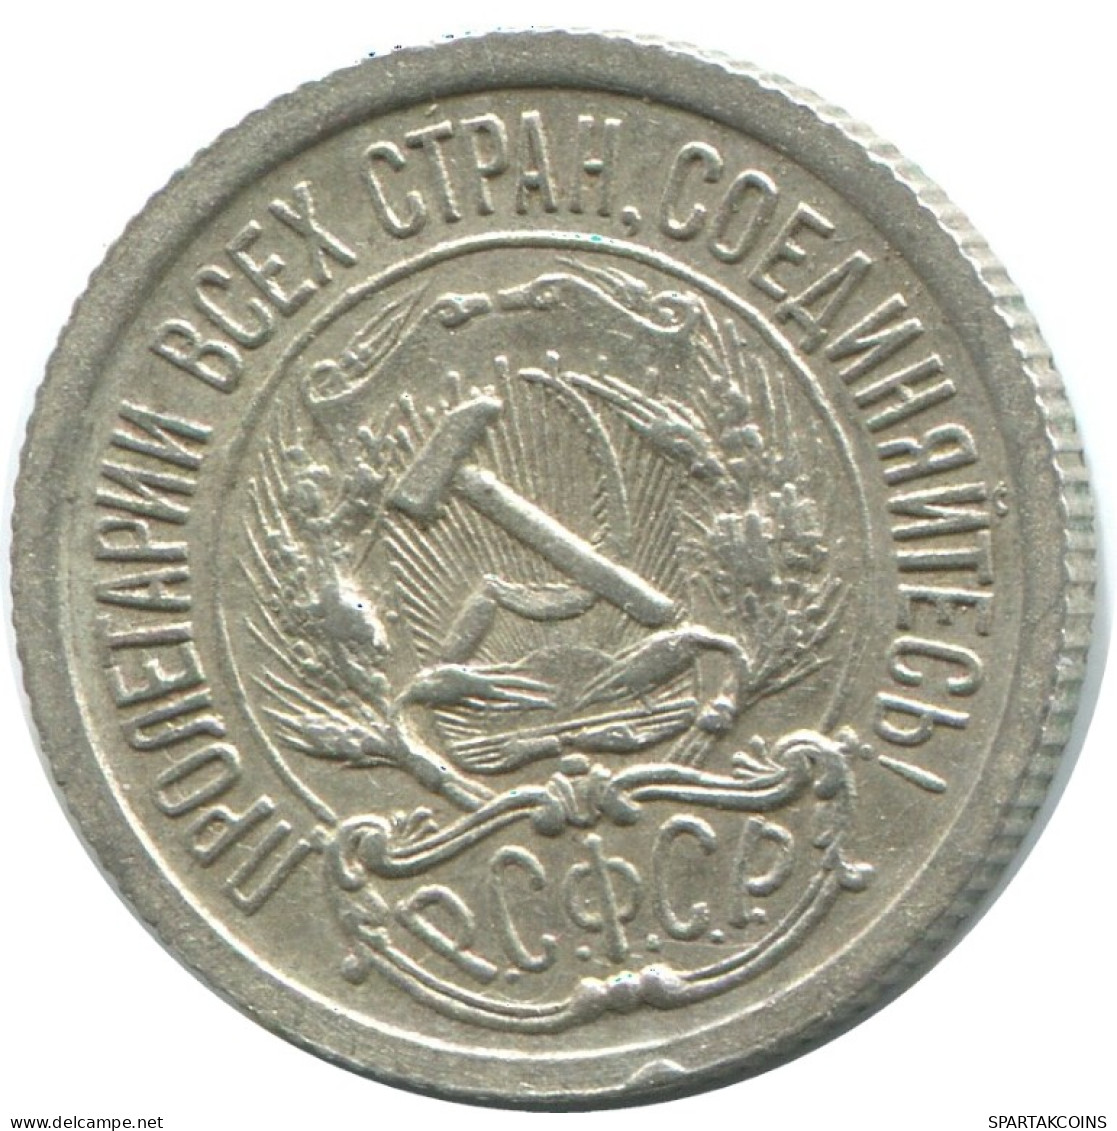 10 KOPEKS 1923 RUSSIA RSFSR SILVER Coin HIGH GRADE #AF008.4.U.A - Russia